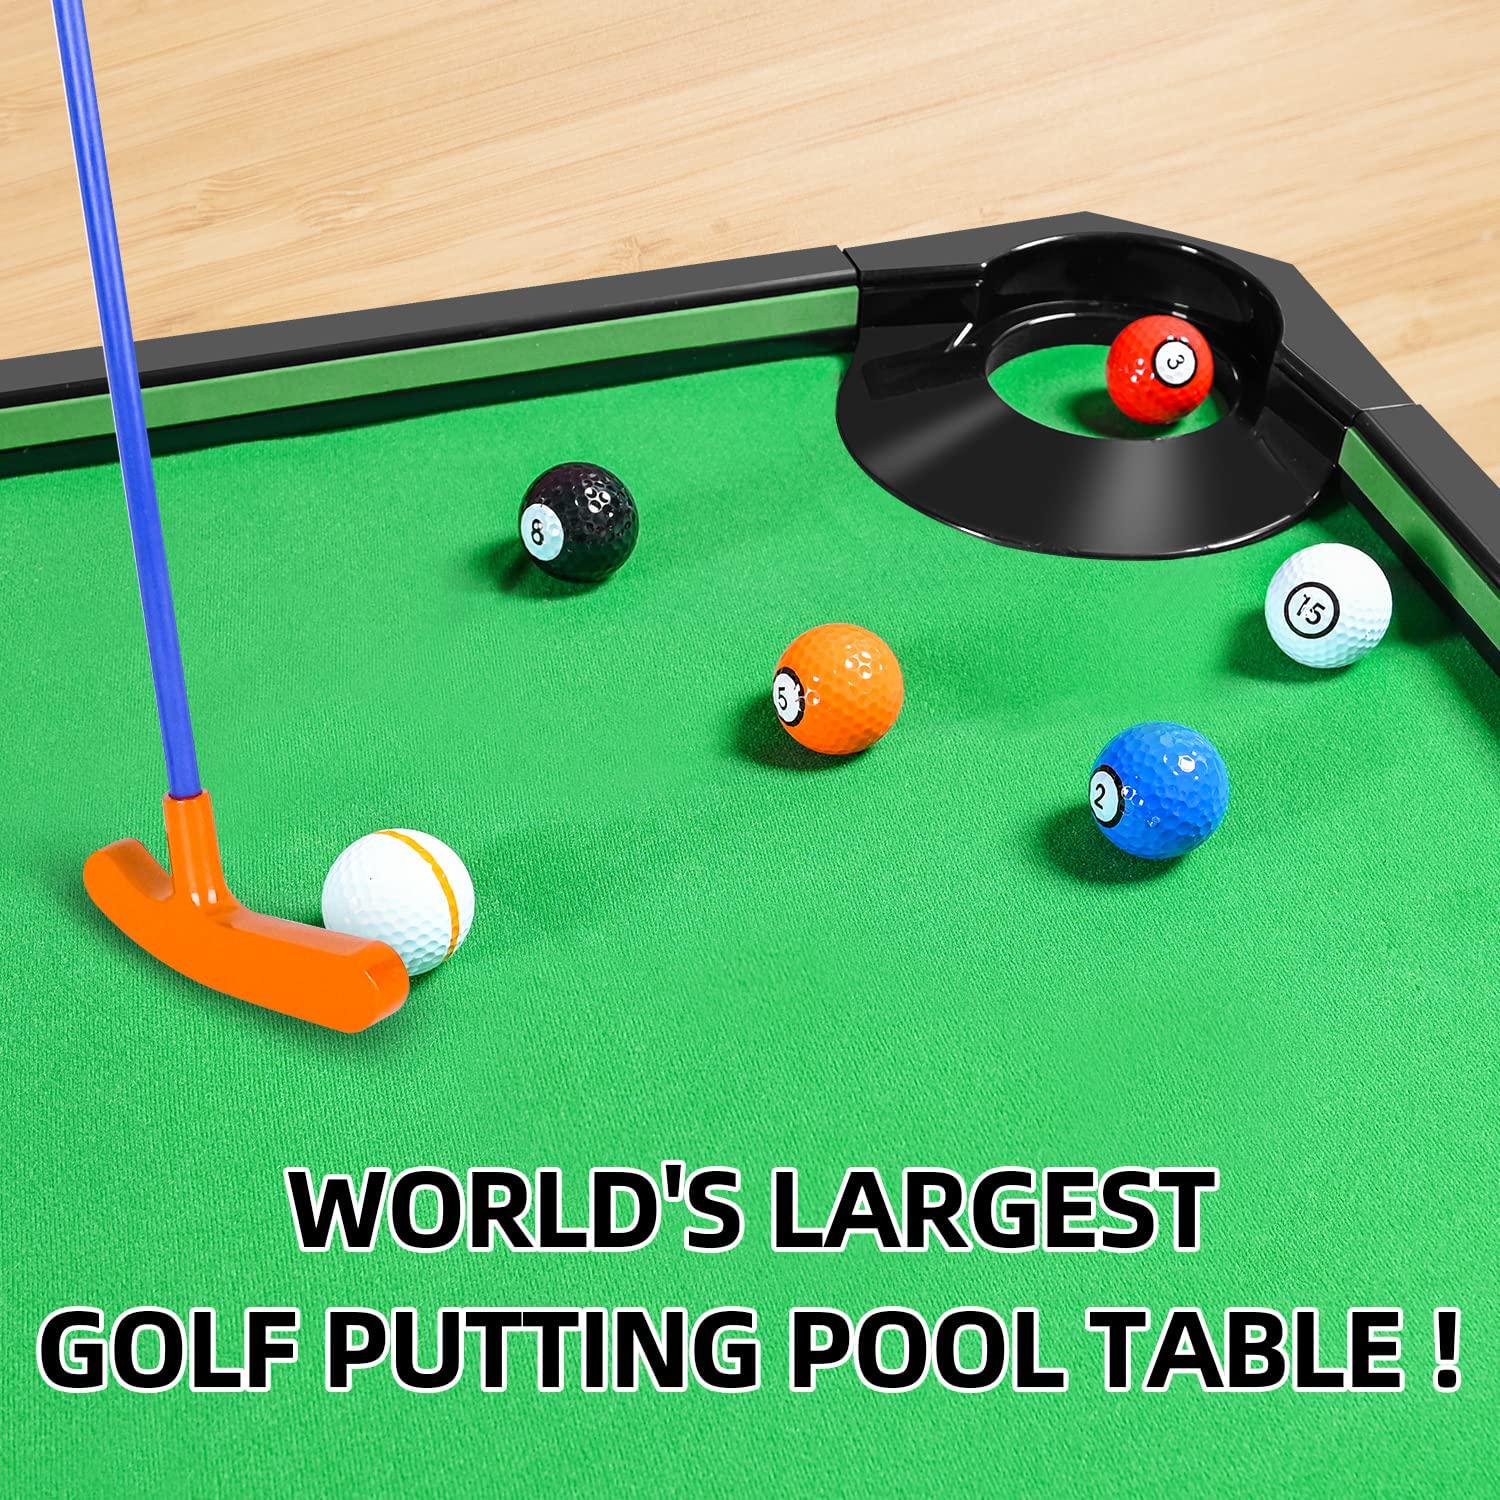 GOODLYSPORTS, GOODLYSPORTS Golf Pool Indoor Games-World's Largest Golf Putting Pool Table! Unique Golf Games for Kids! The Best Pool Games for Family!